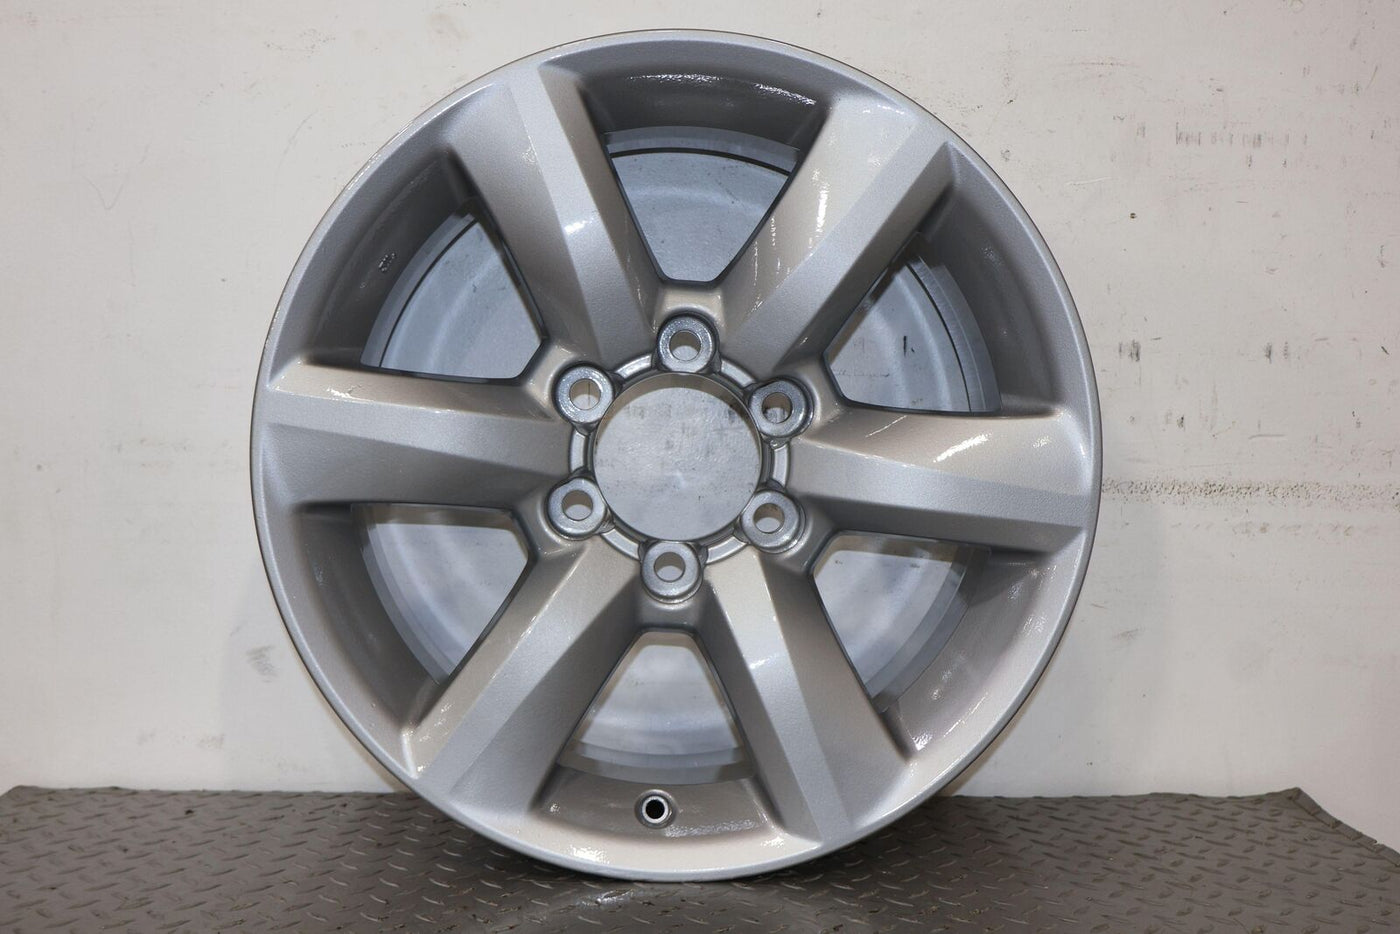 10-21 Lexus GX460 18x7.5 Alloy Wheels Set of 4 (Powdercoated SIlver) No Caps